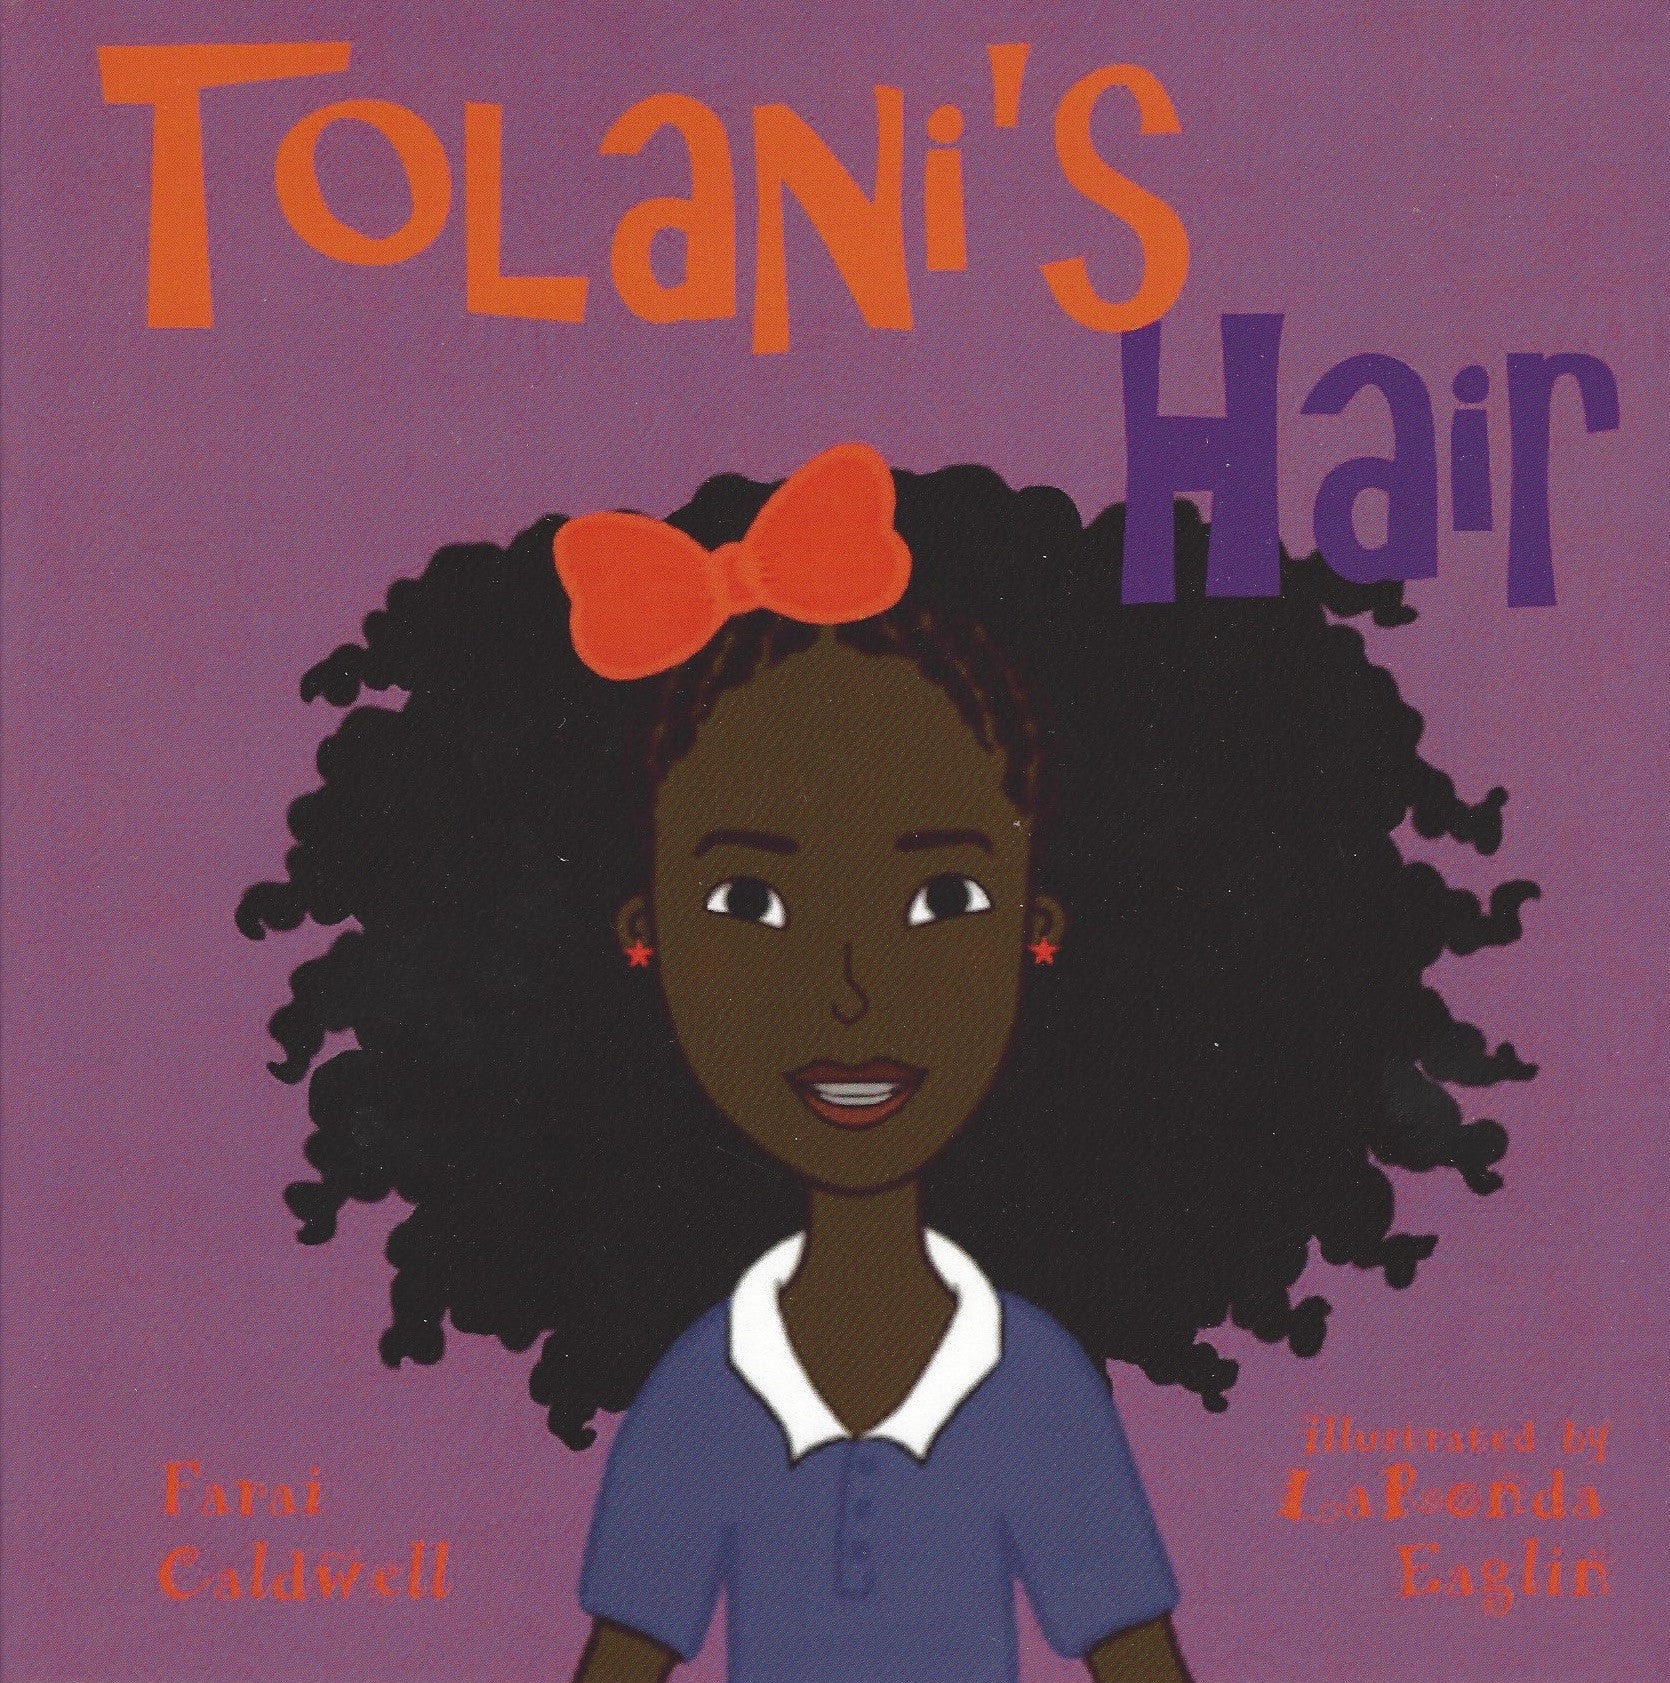 Tolani's Hair , Book - Daybreak Press Global Bookshop, Daybreak Press Global Bookshop
